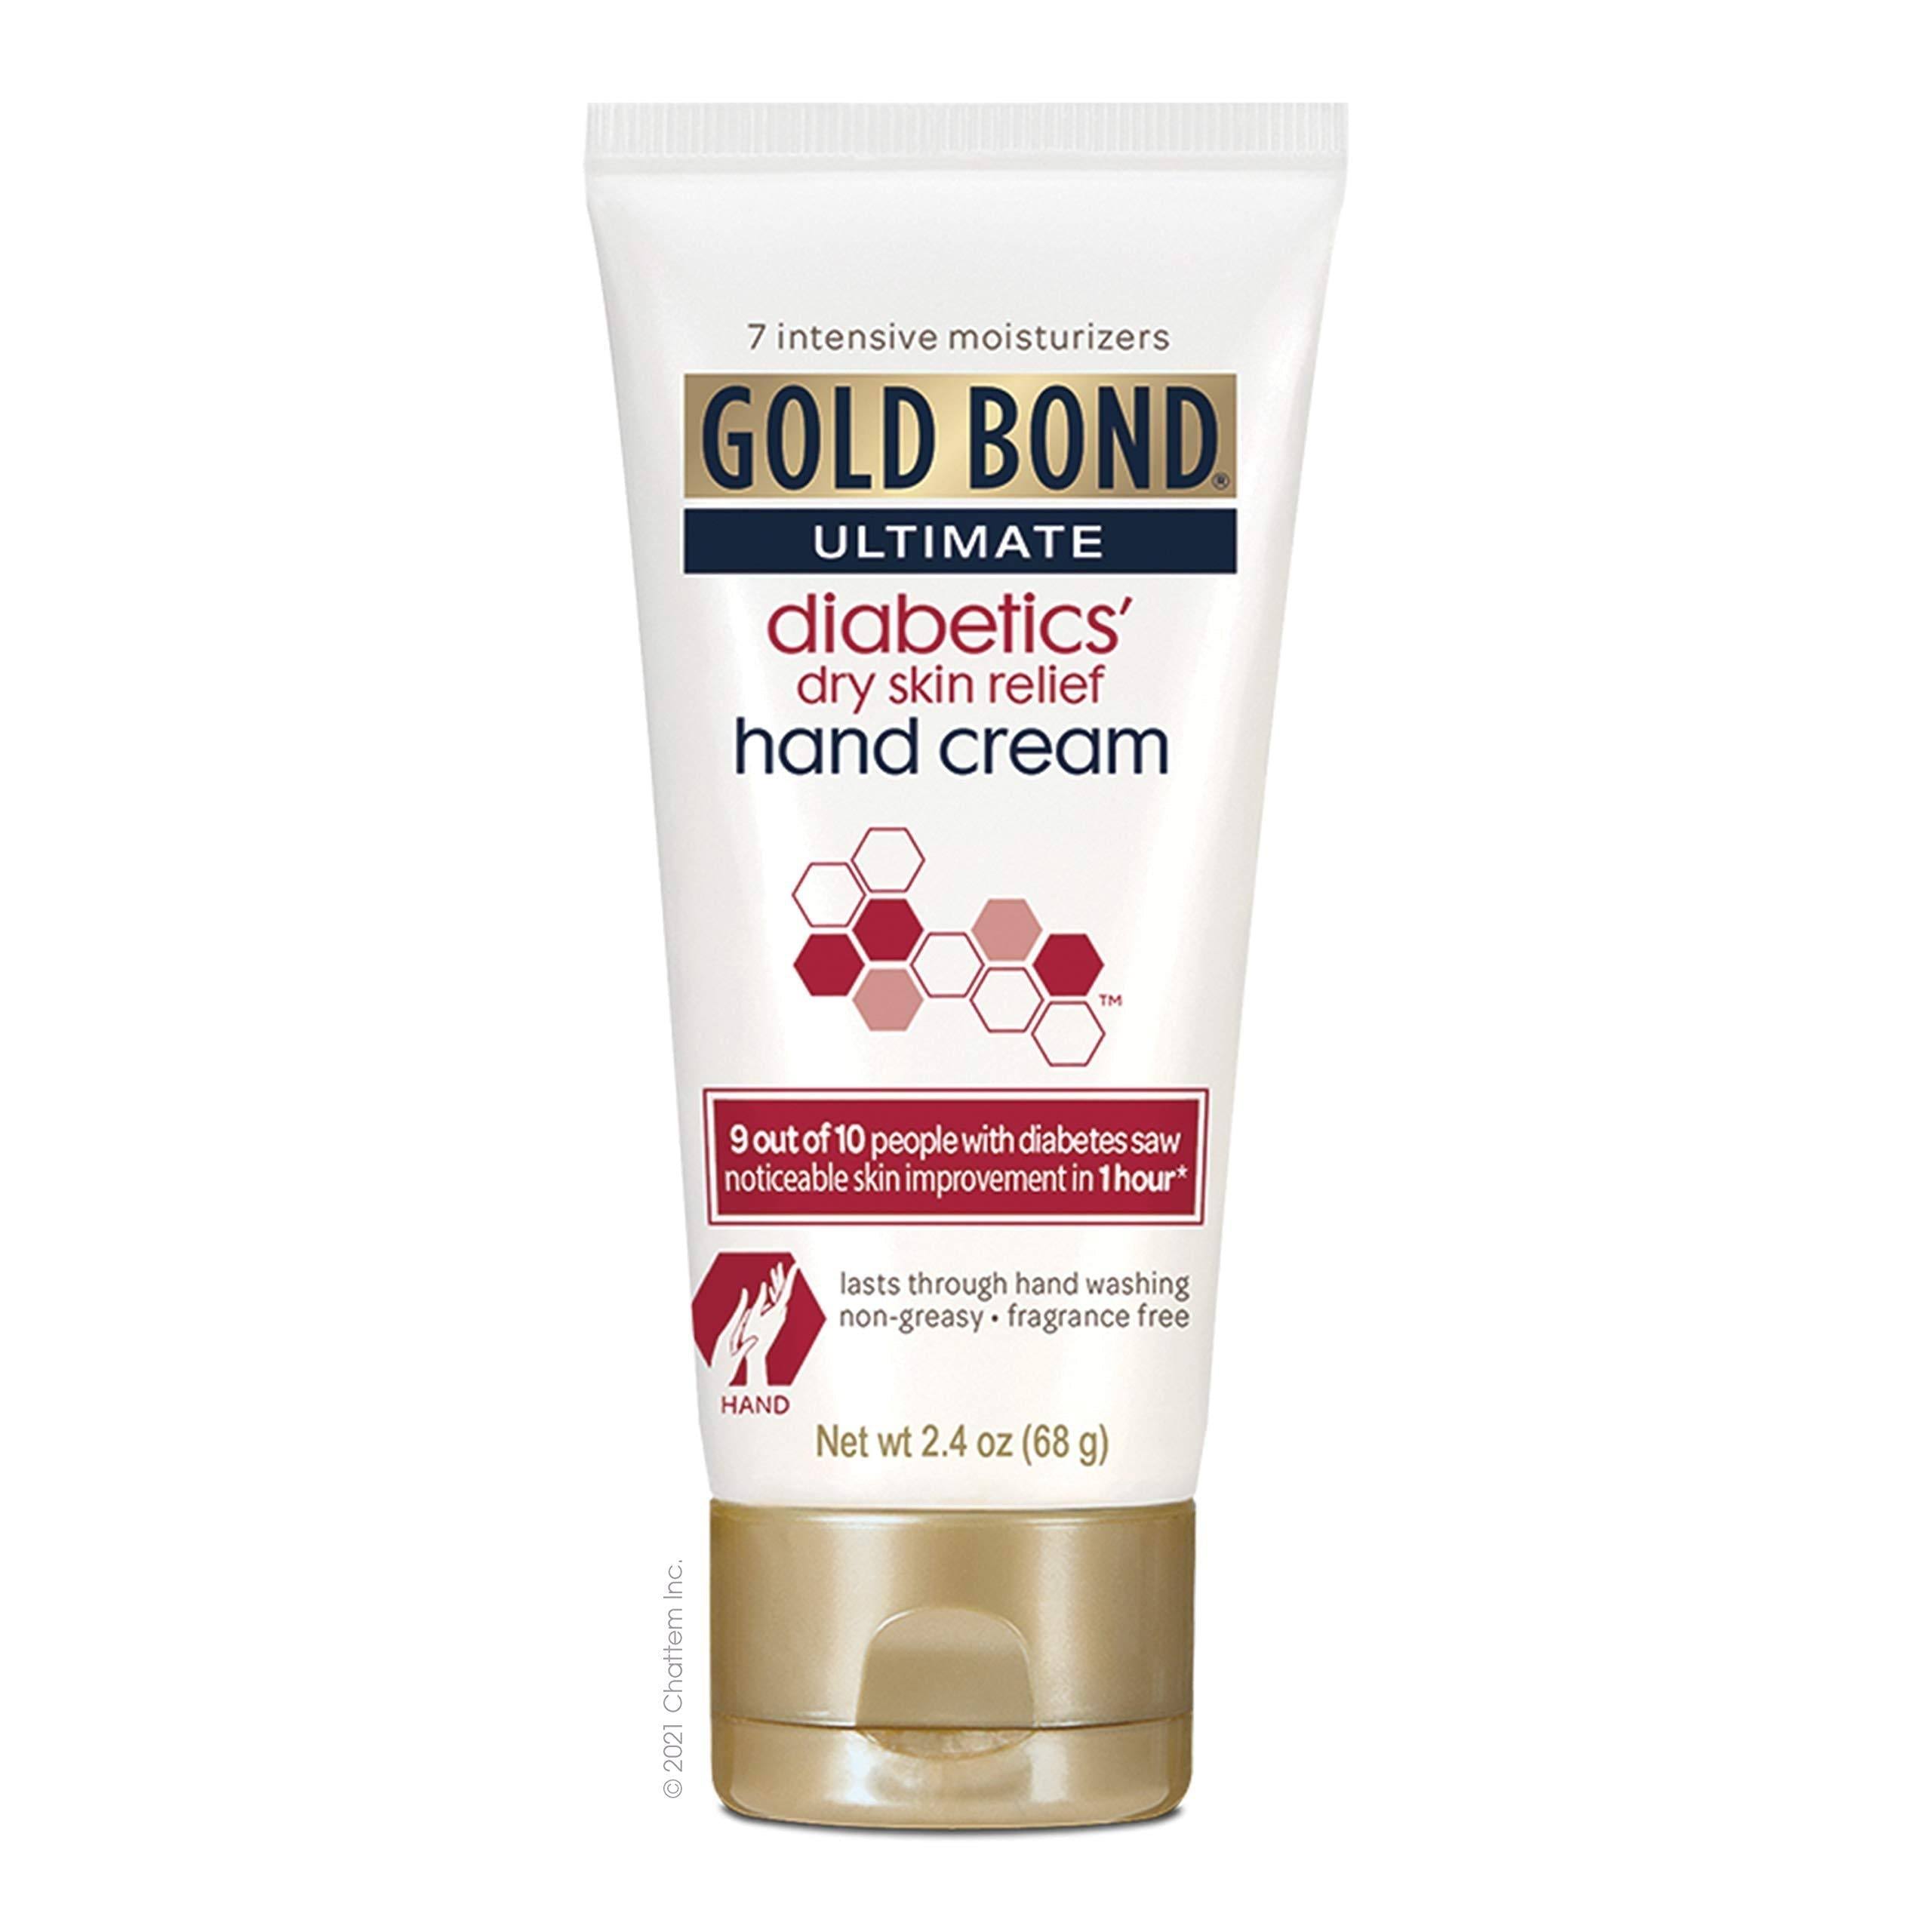 Gold Bond Ultimate Diabetics' Dry Skin Relief Hand Cream - 68g